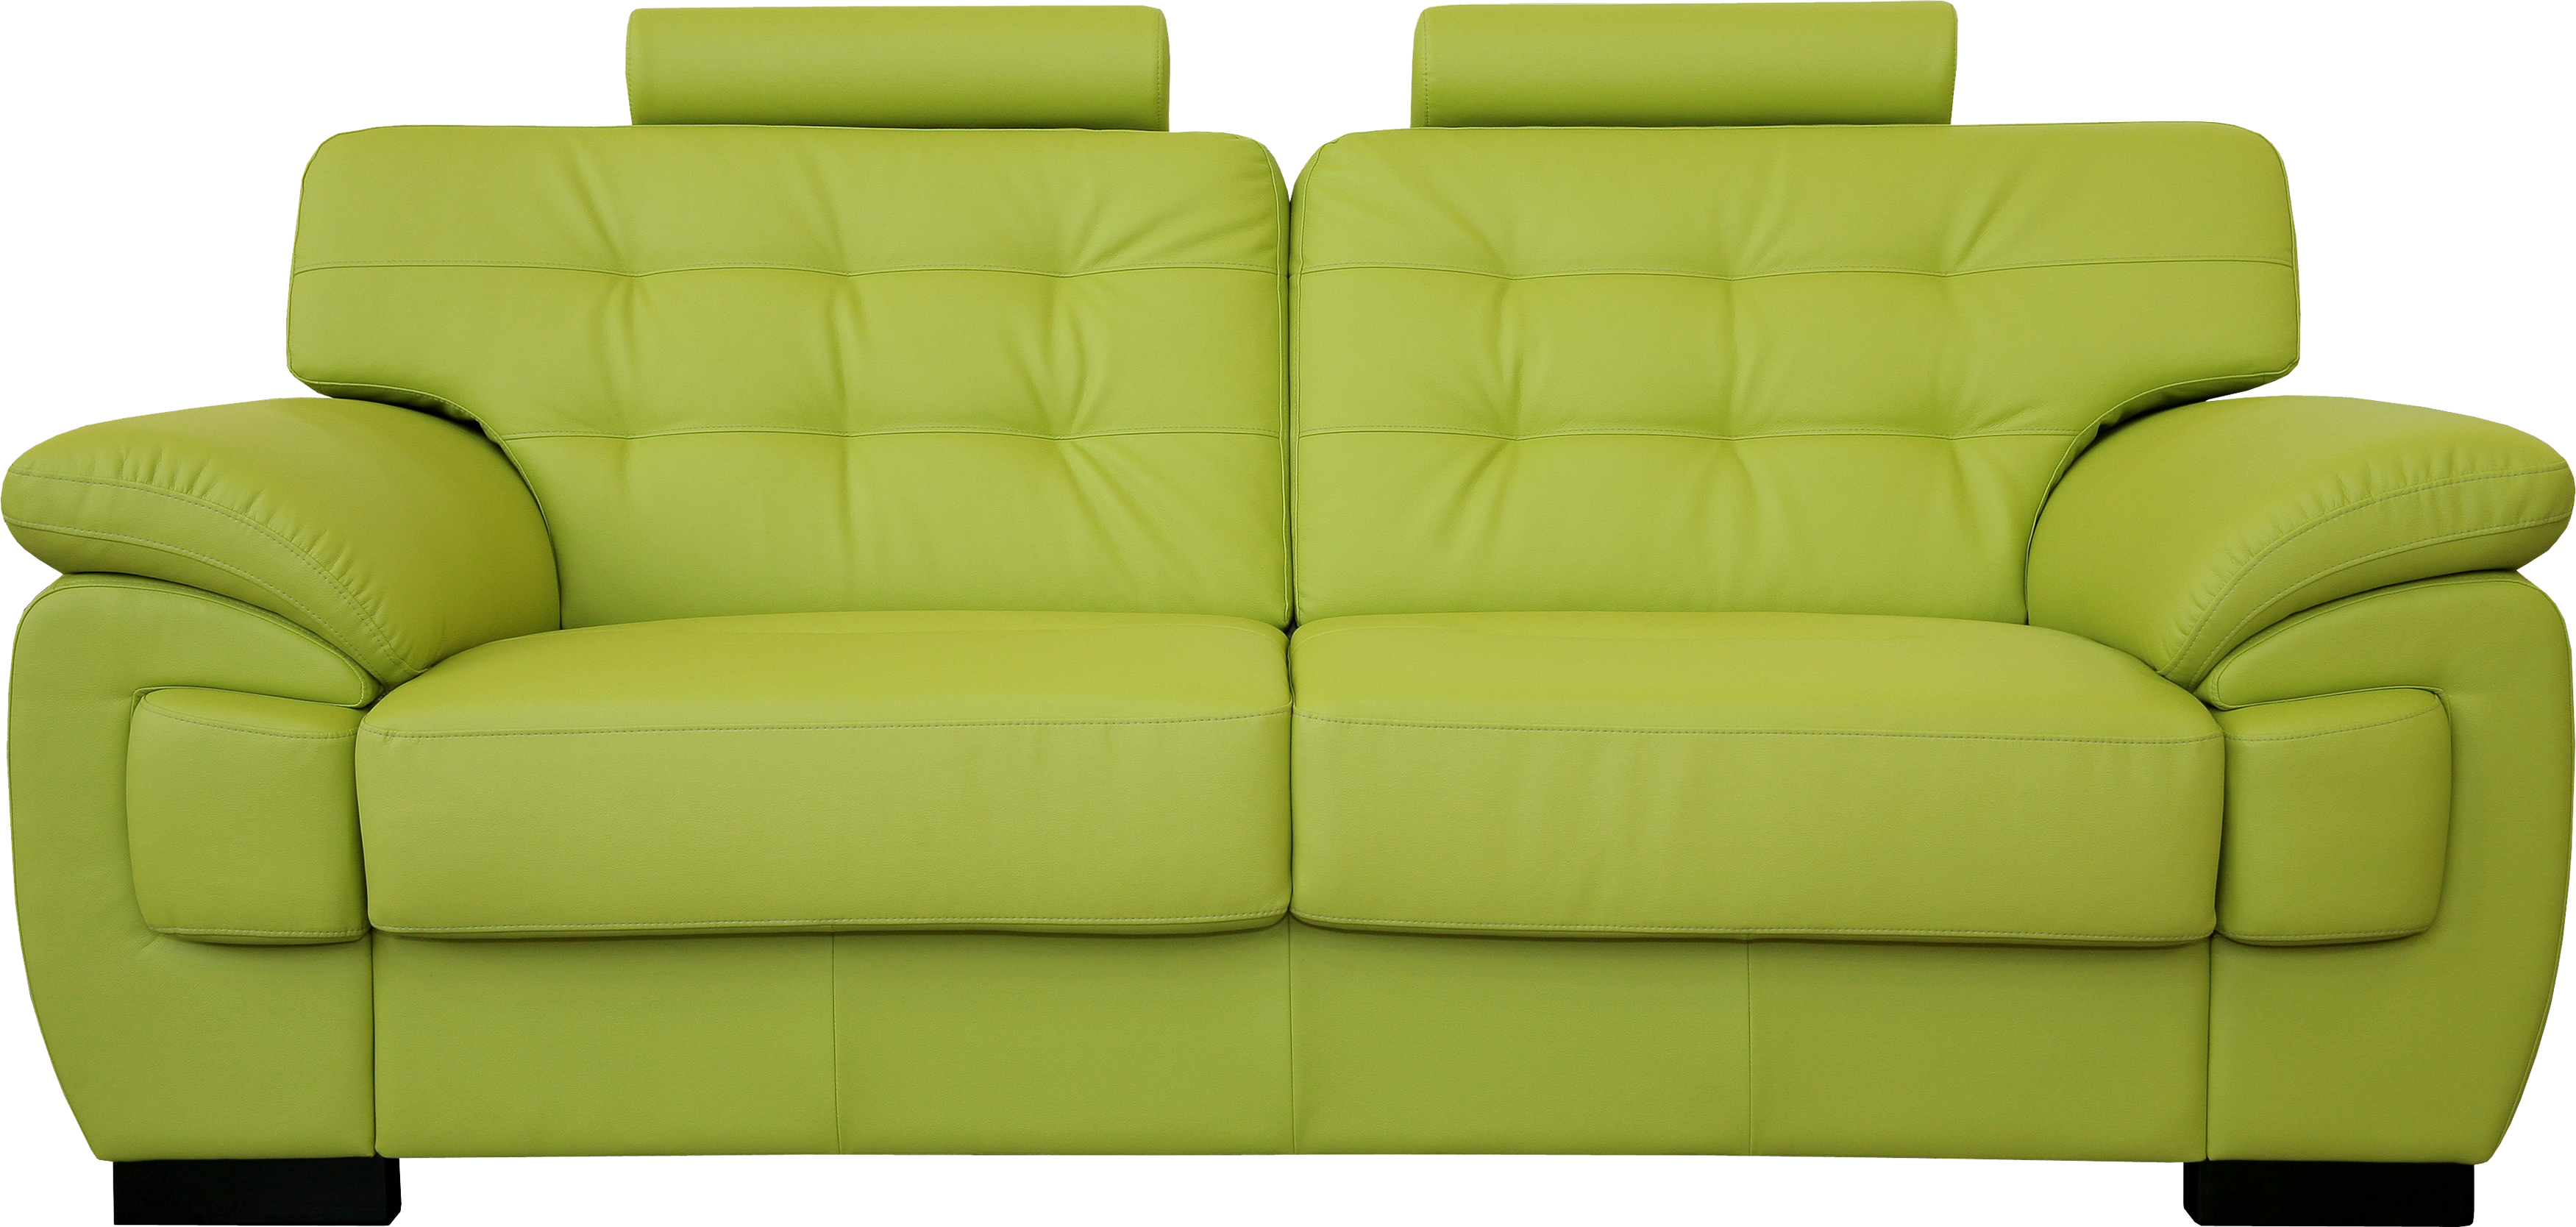 Green Sofa Png Image - Sofa, Transparent background PNG HD thumbnail